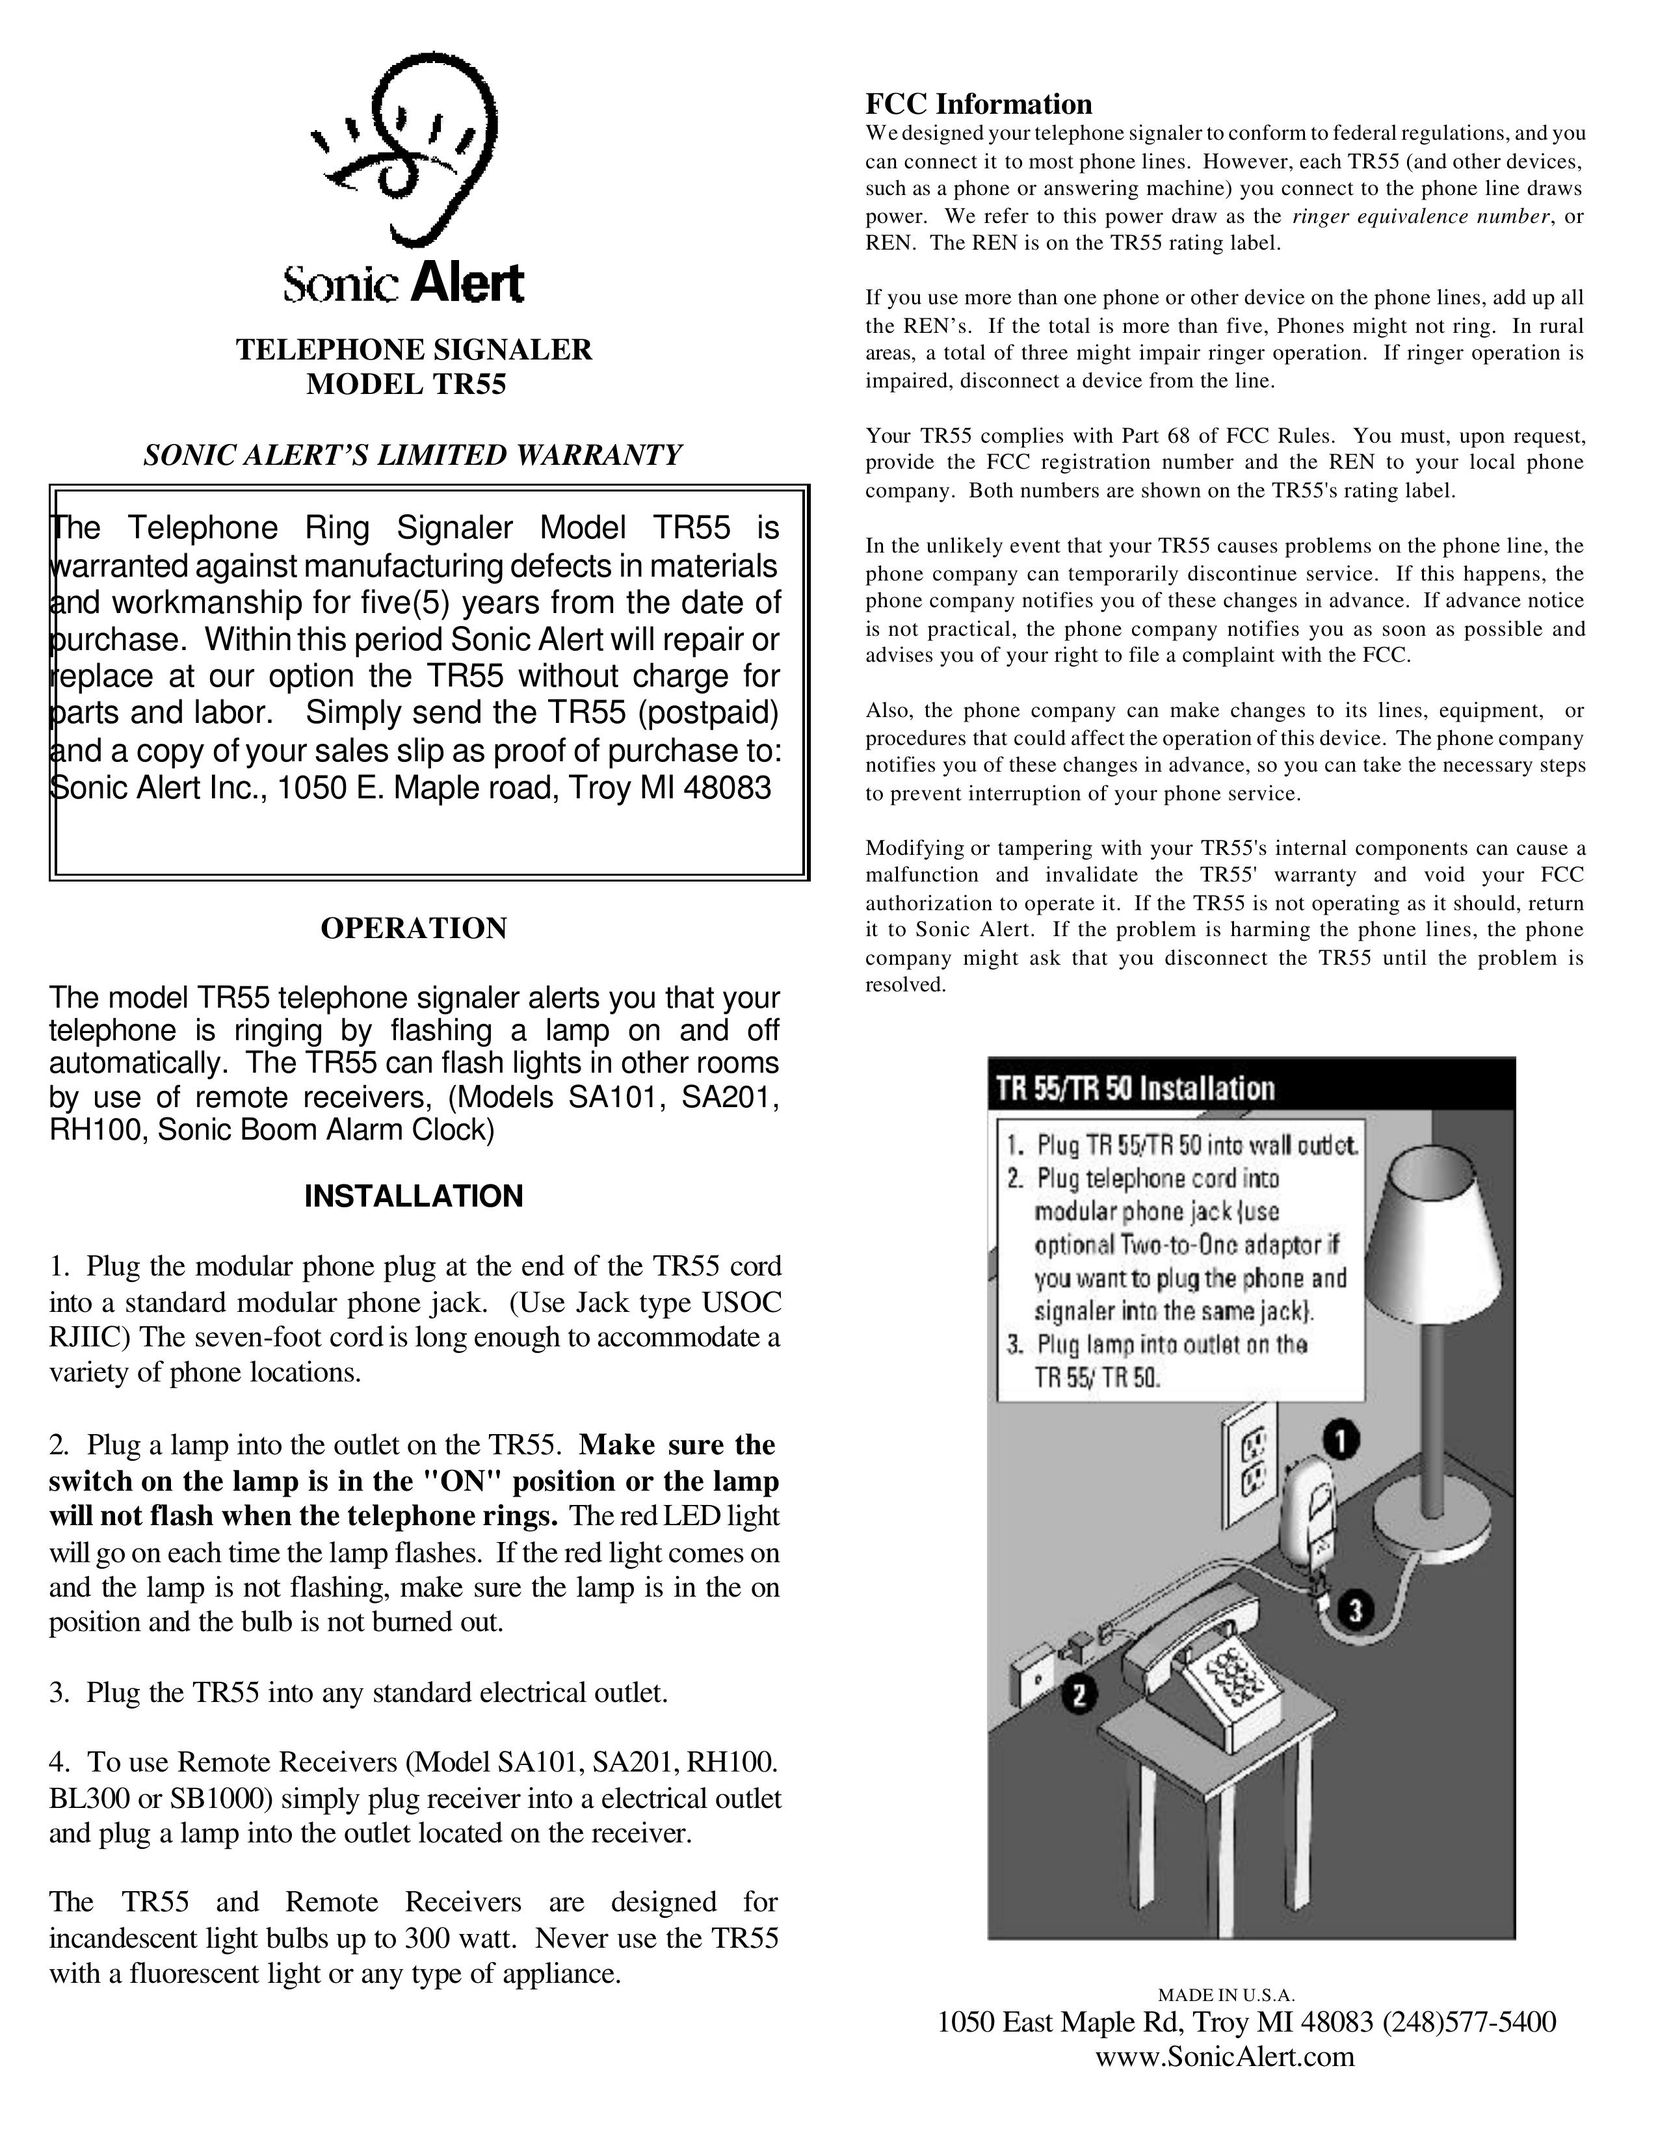 Sonic Alert TR55 Telephone Accessories User Manual